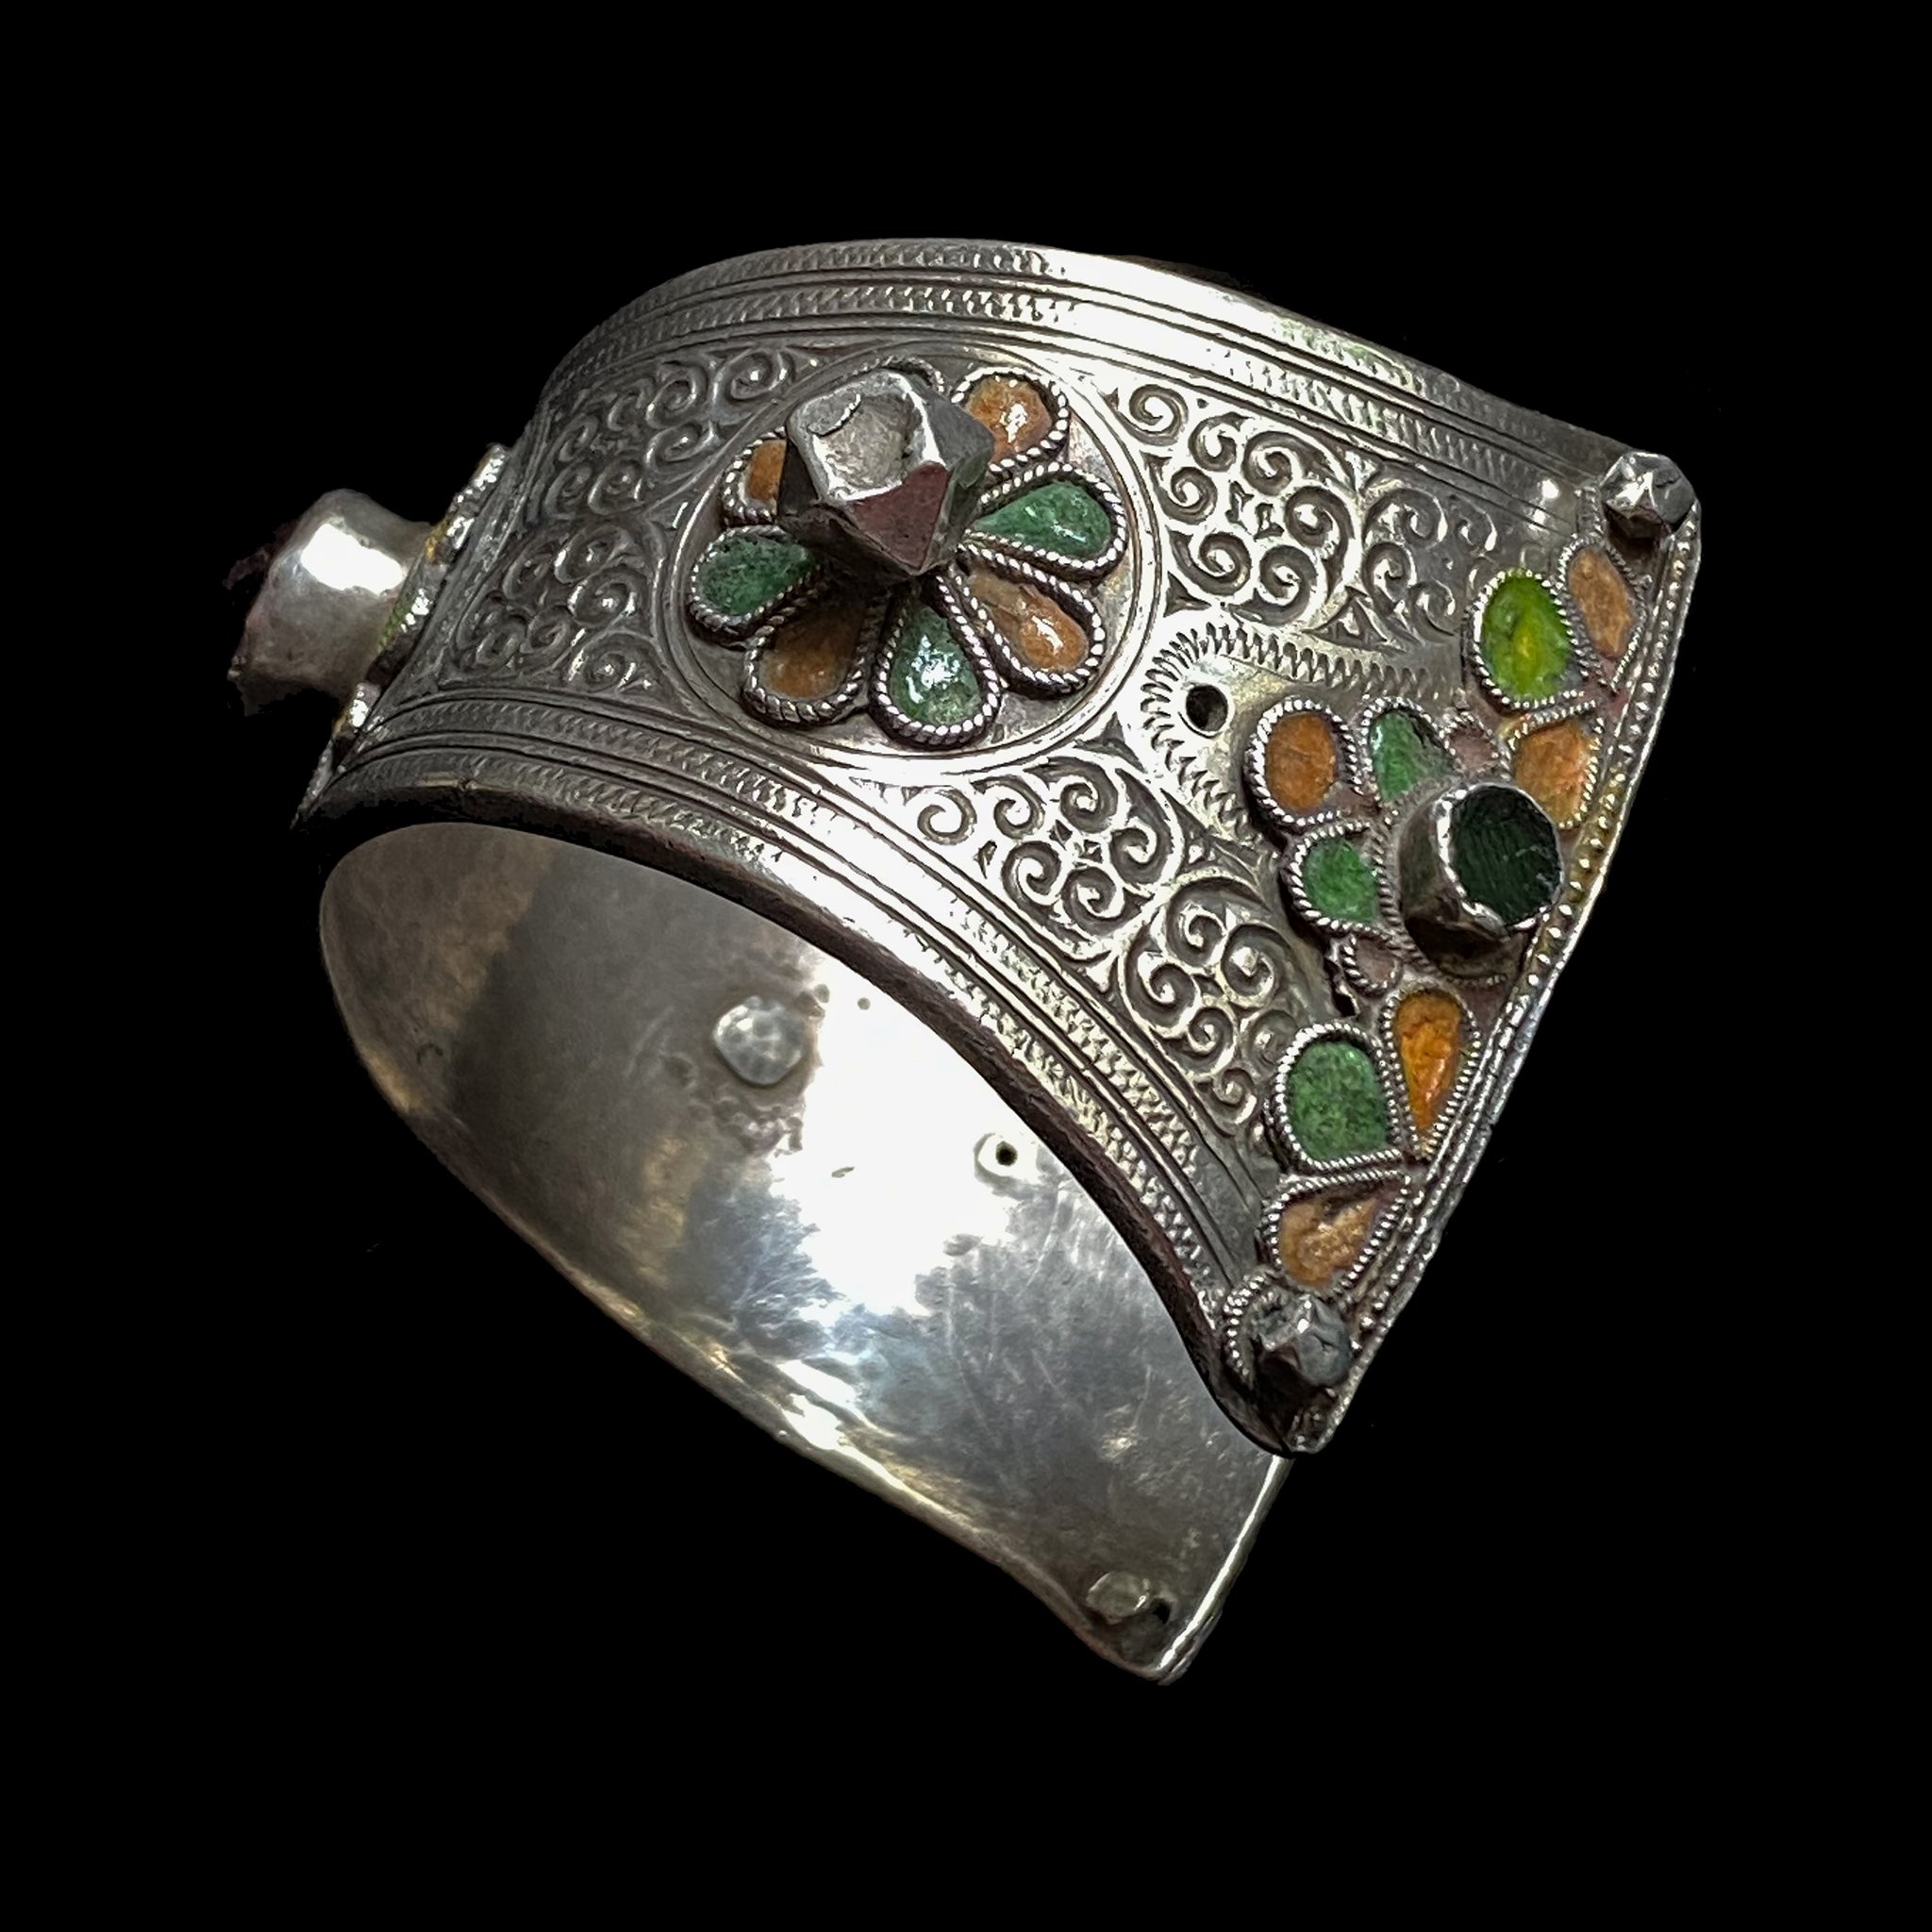 Rare Antique Silver Cuff Bracelet from the Aït Baha region of Morocco